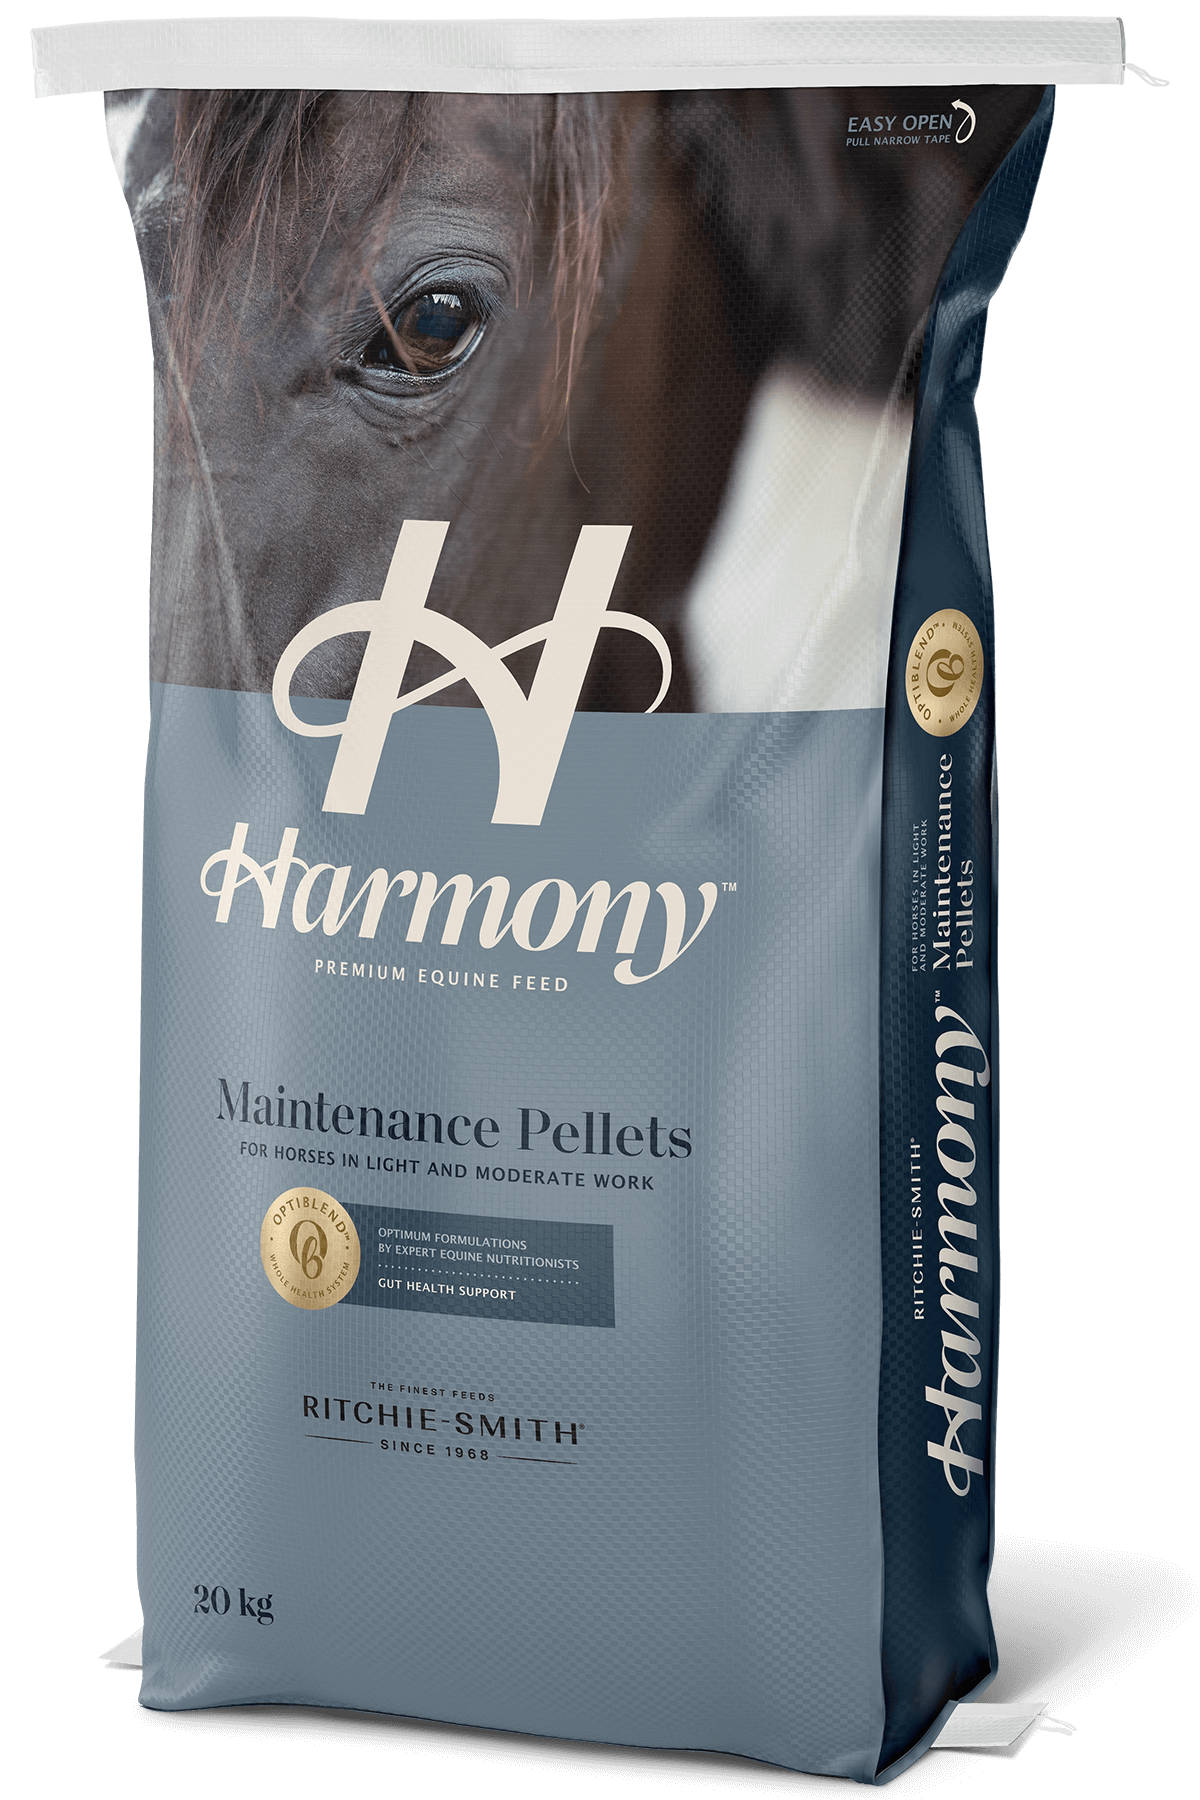 Maintenance Pellets by Harmony Premium Equine Feed